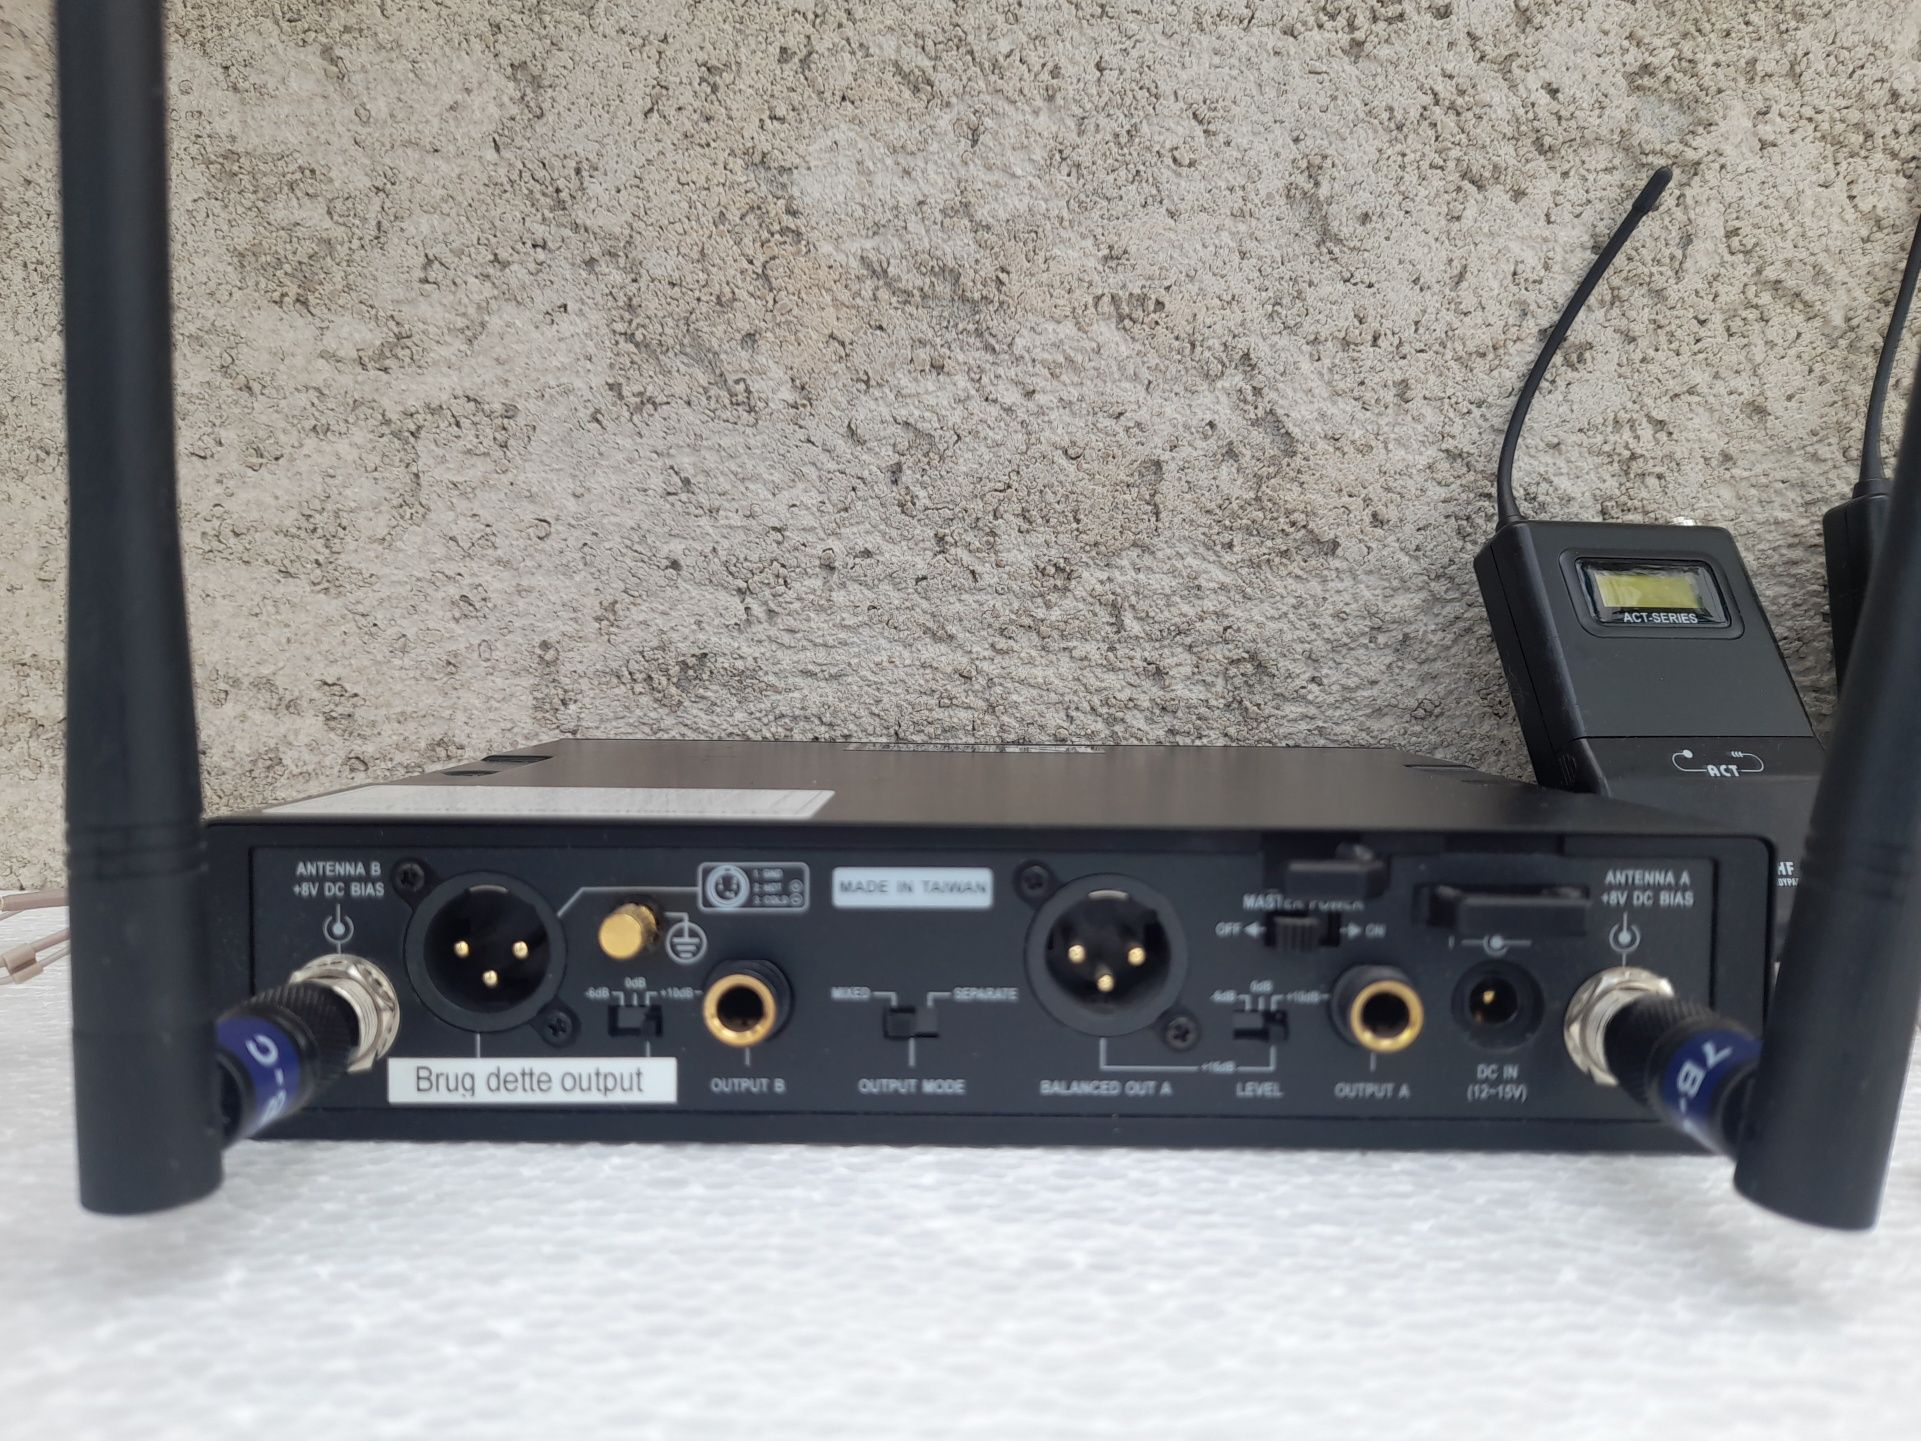 sistem wireless Mipro ACT-52  ( voce / microfon )